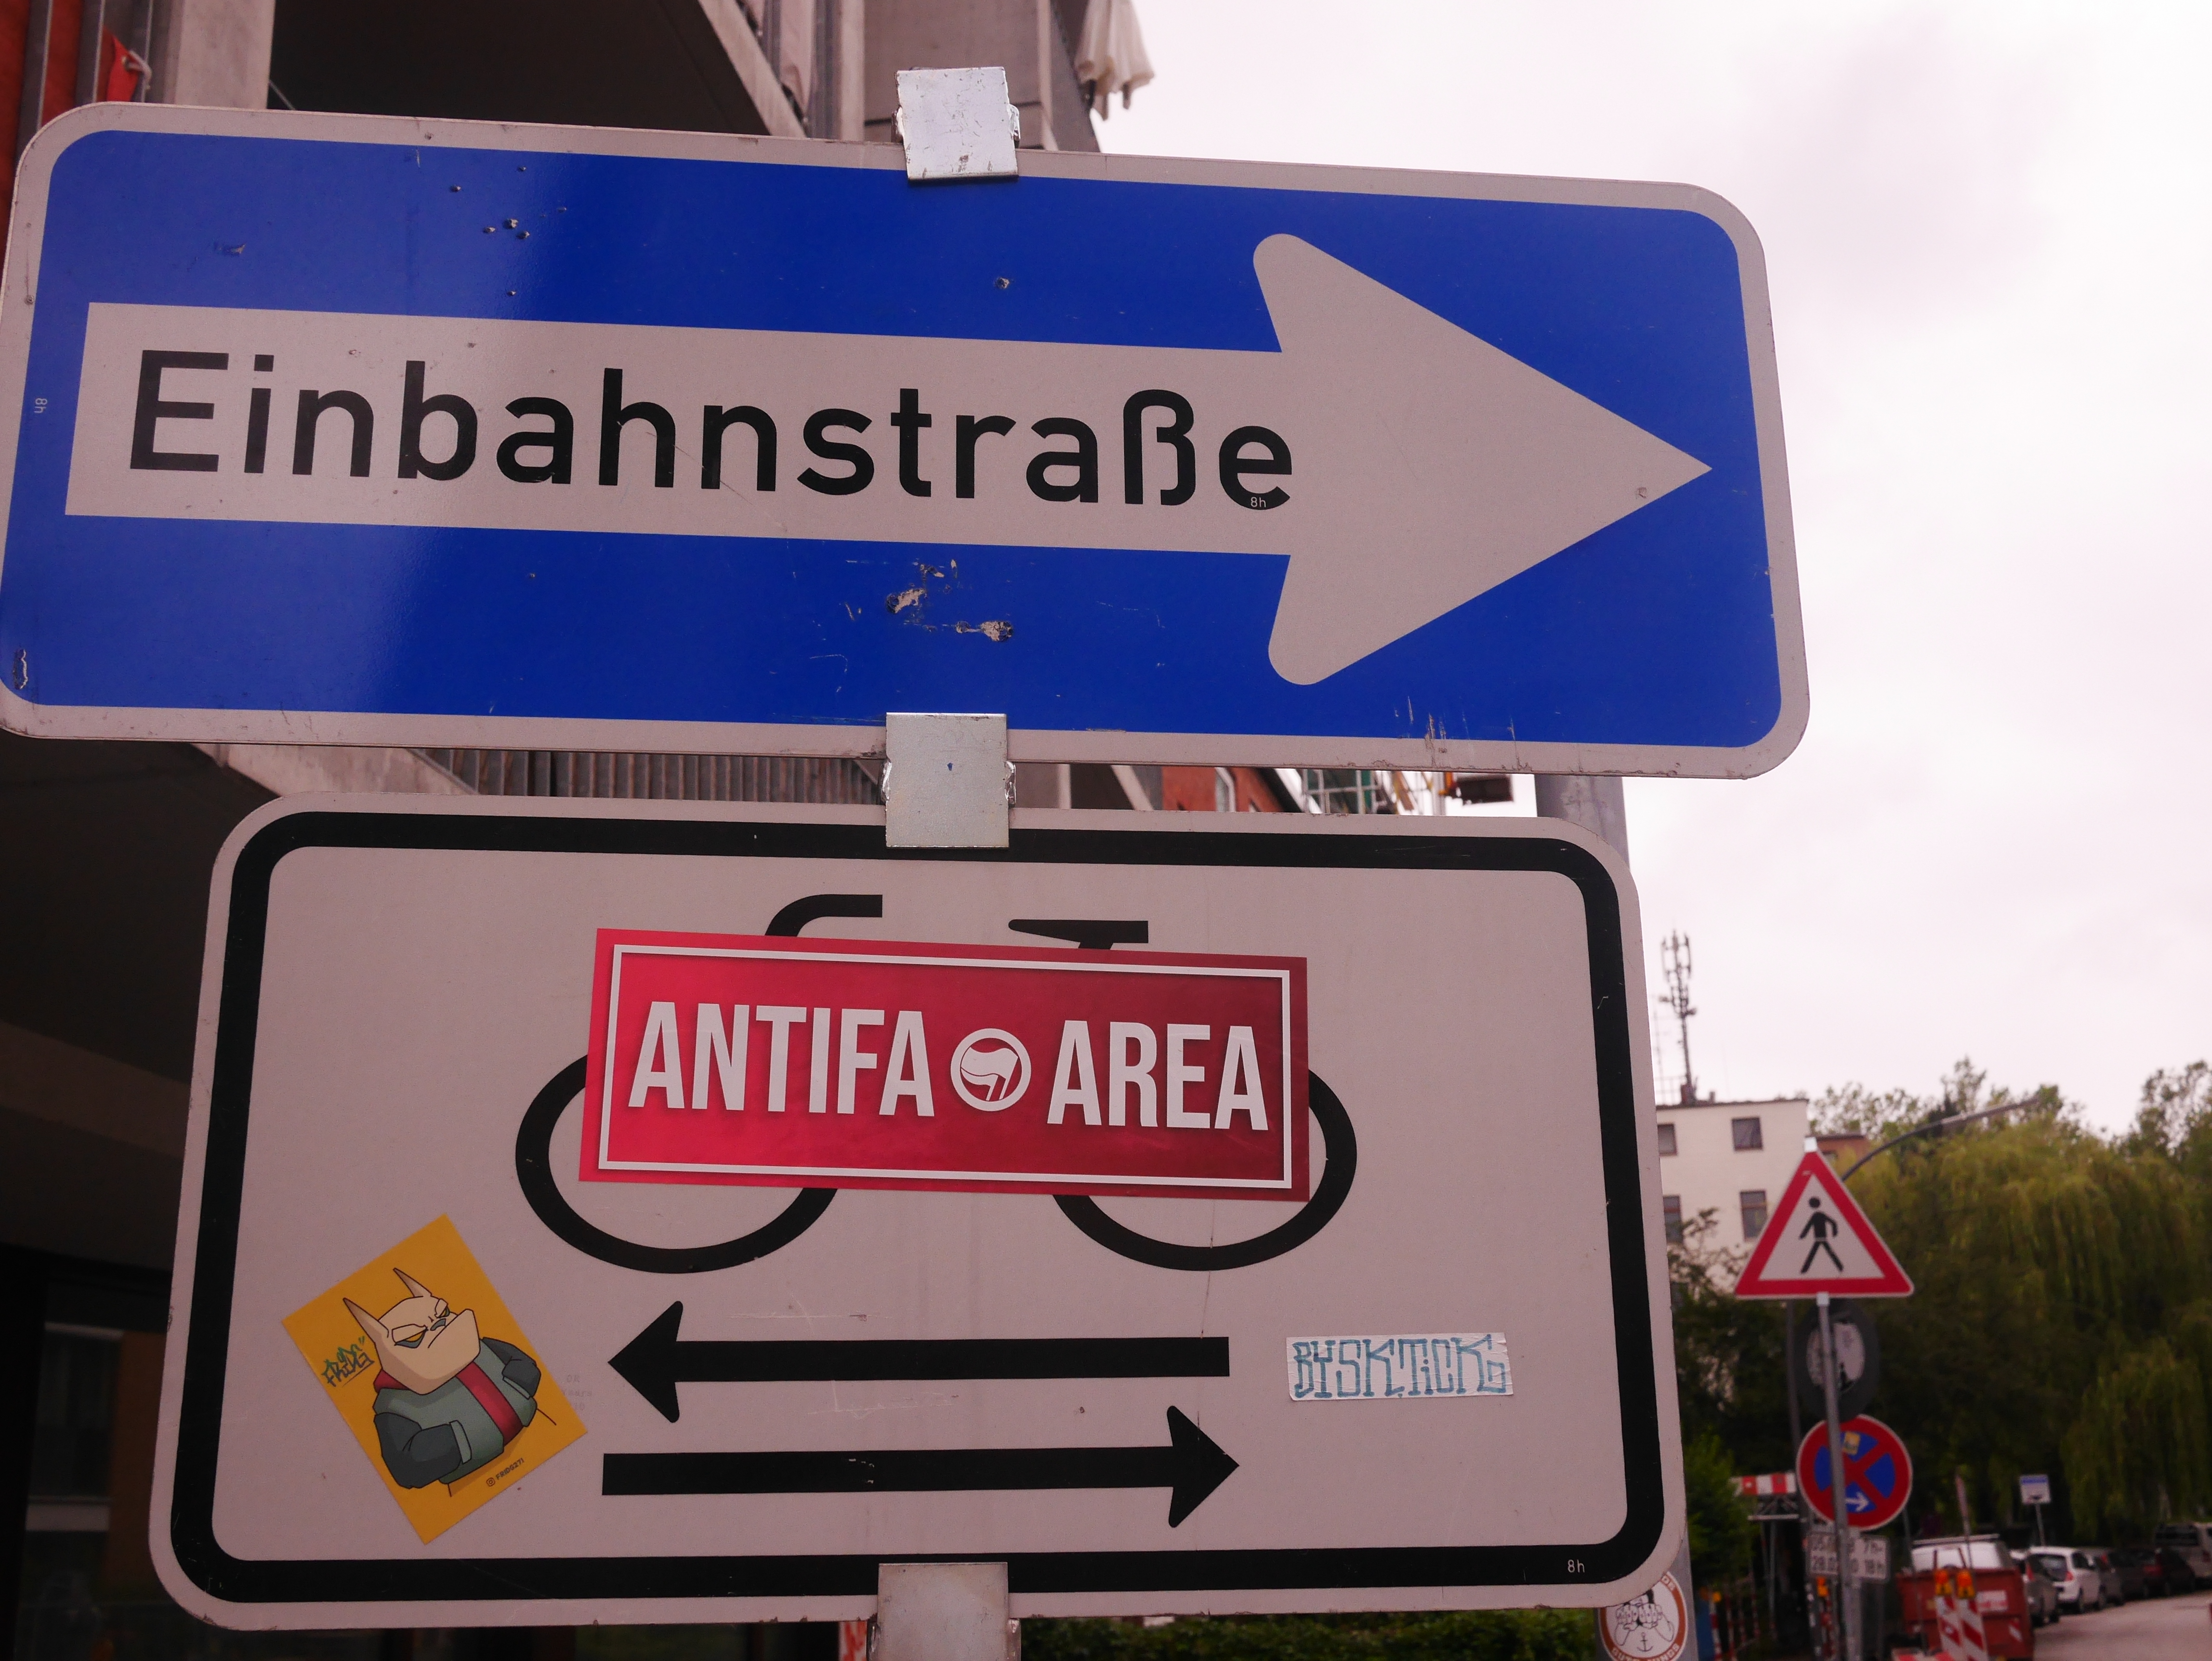 "Antifa Zone" sticker on a road sign